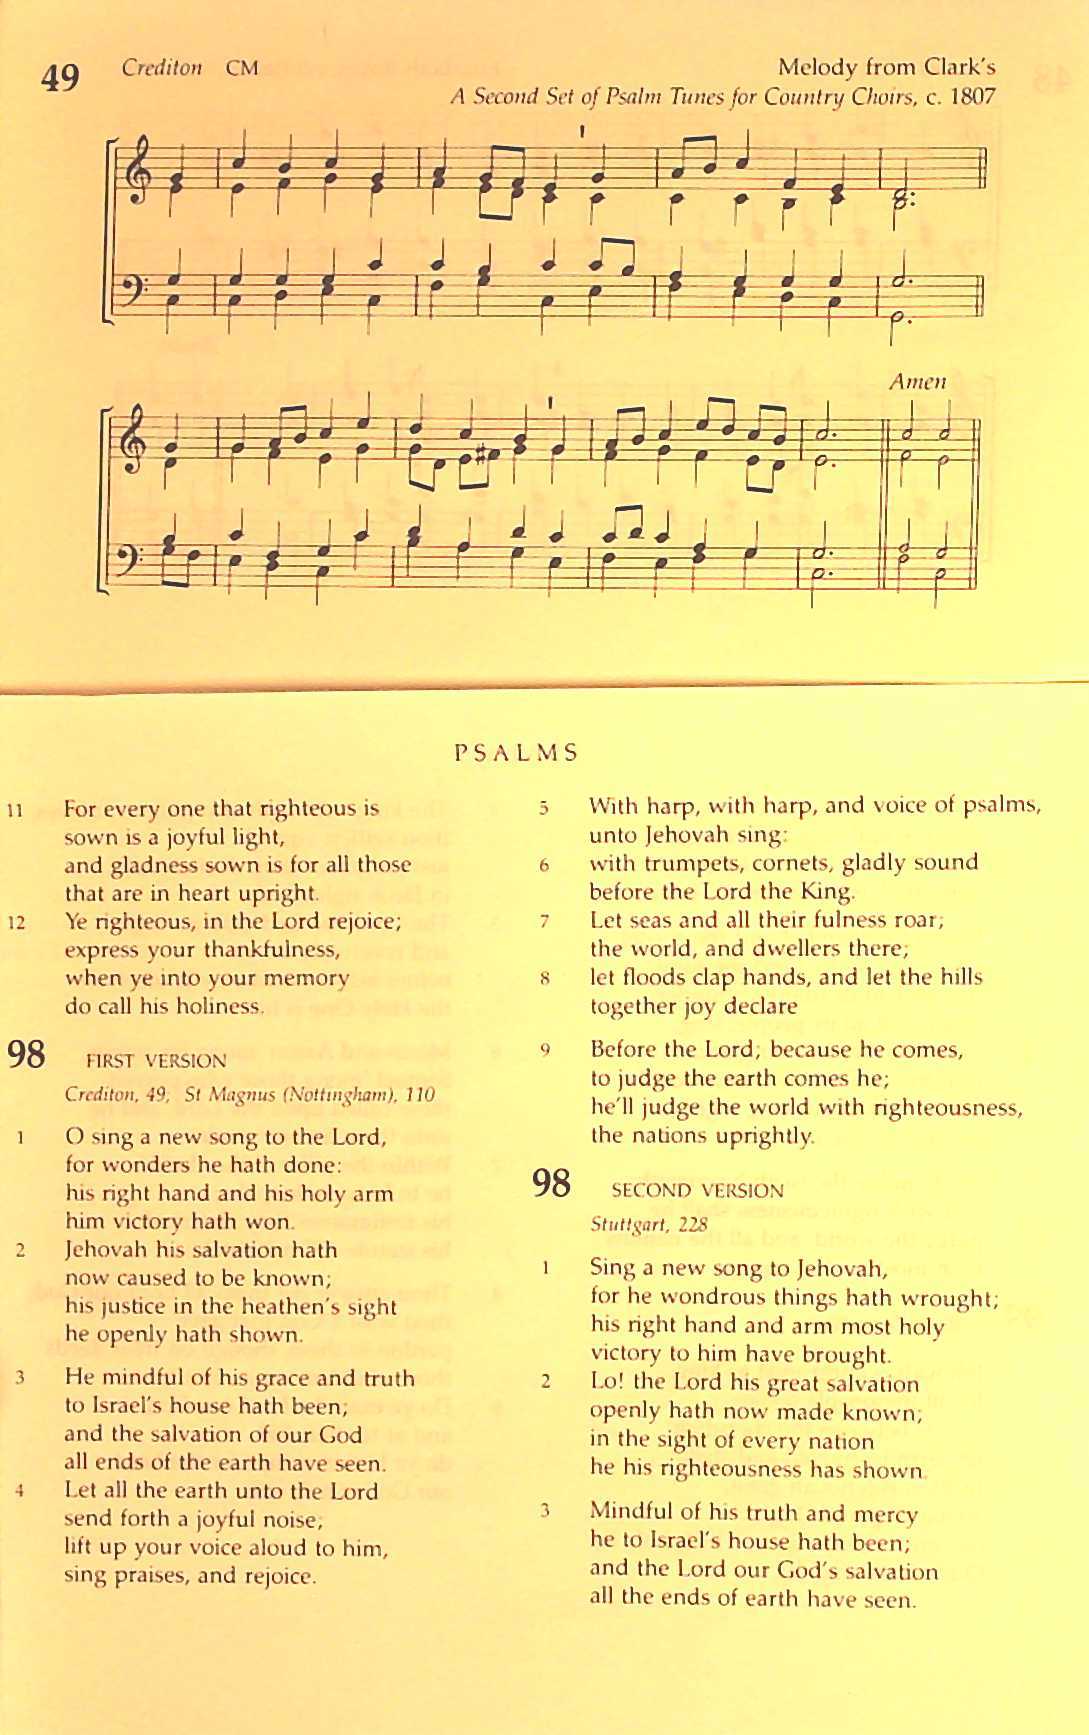 The Irish Presbyterian Hymbook page 367